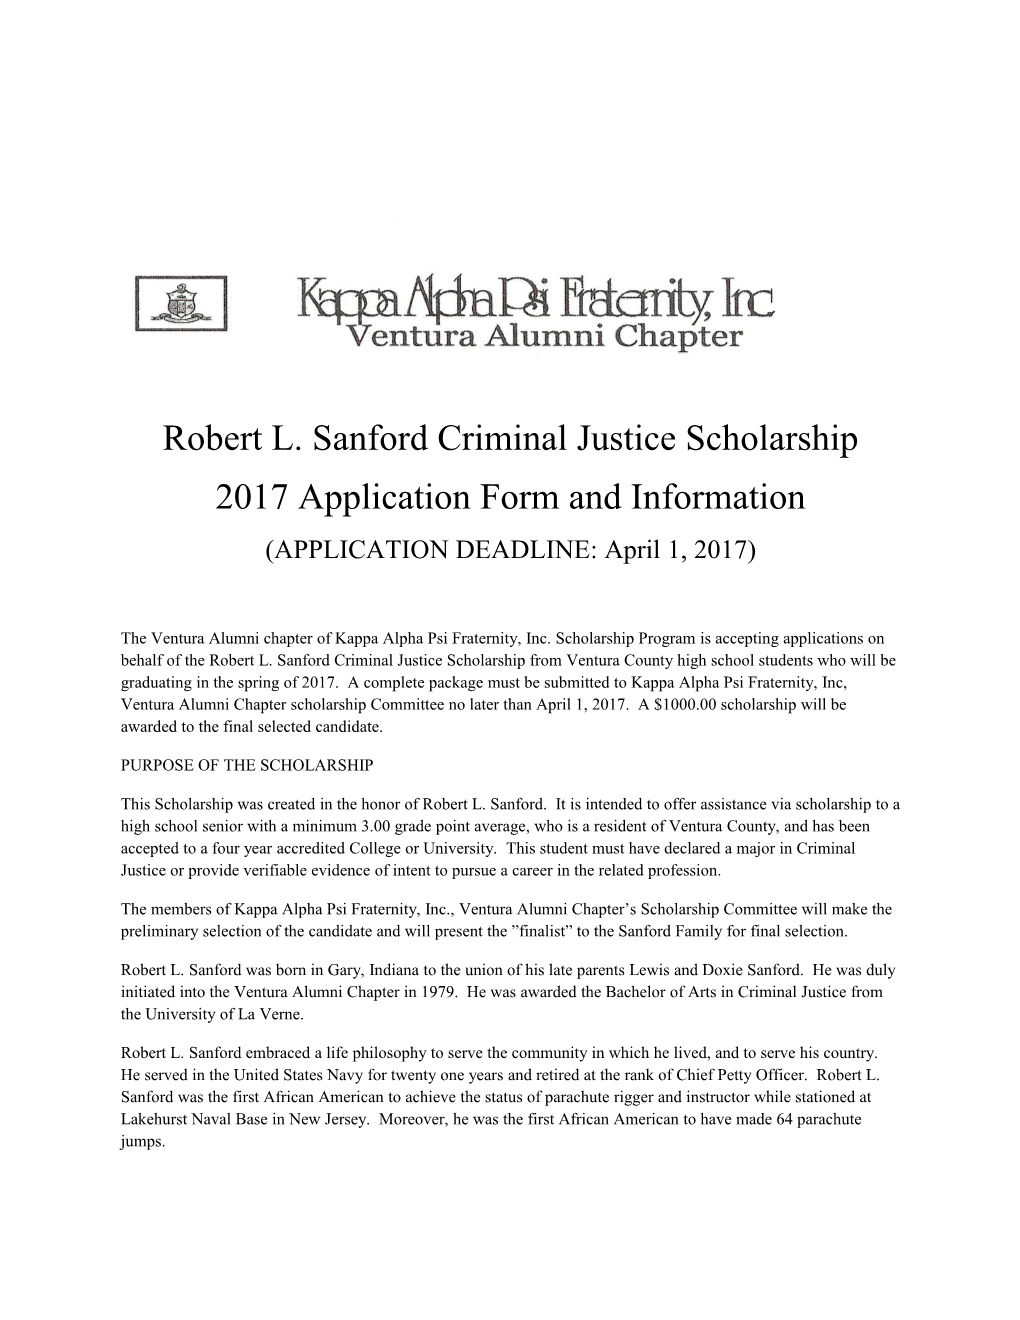 Robert L. Sanford Criminal Justice Scholarship